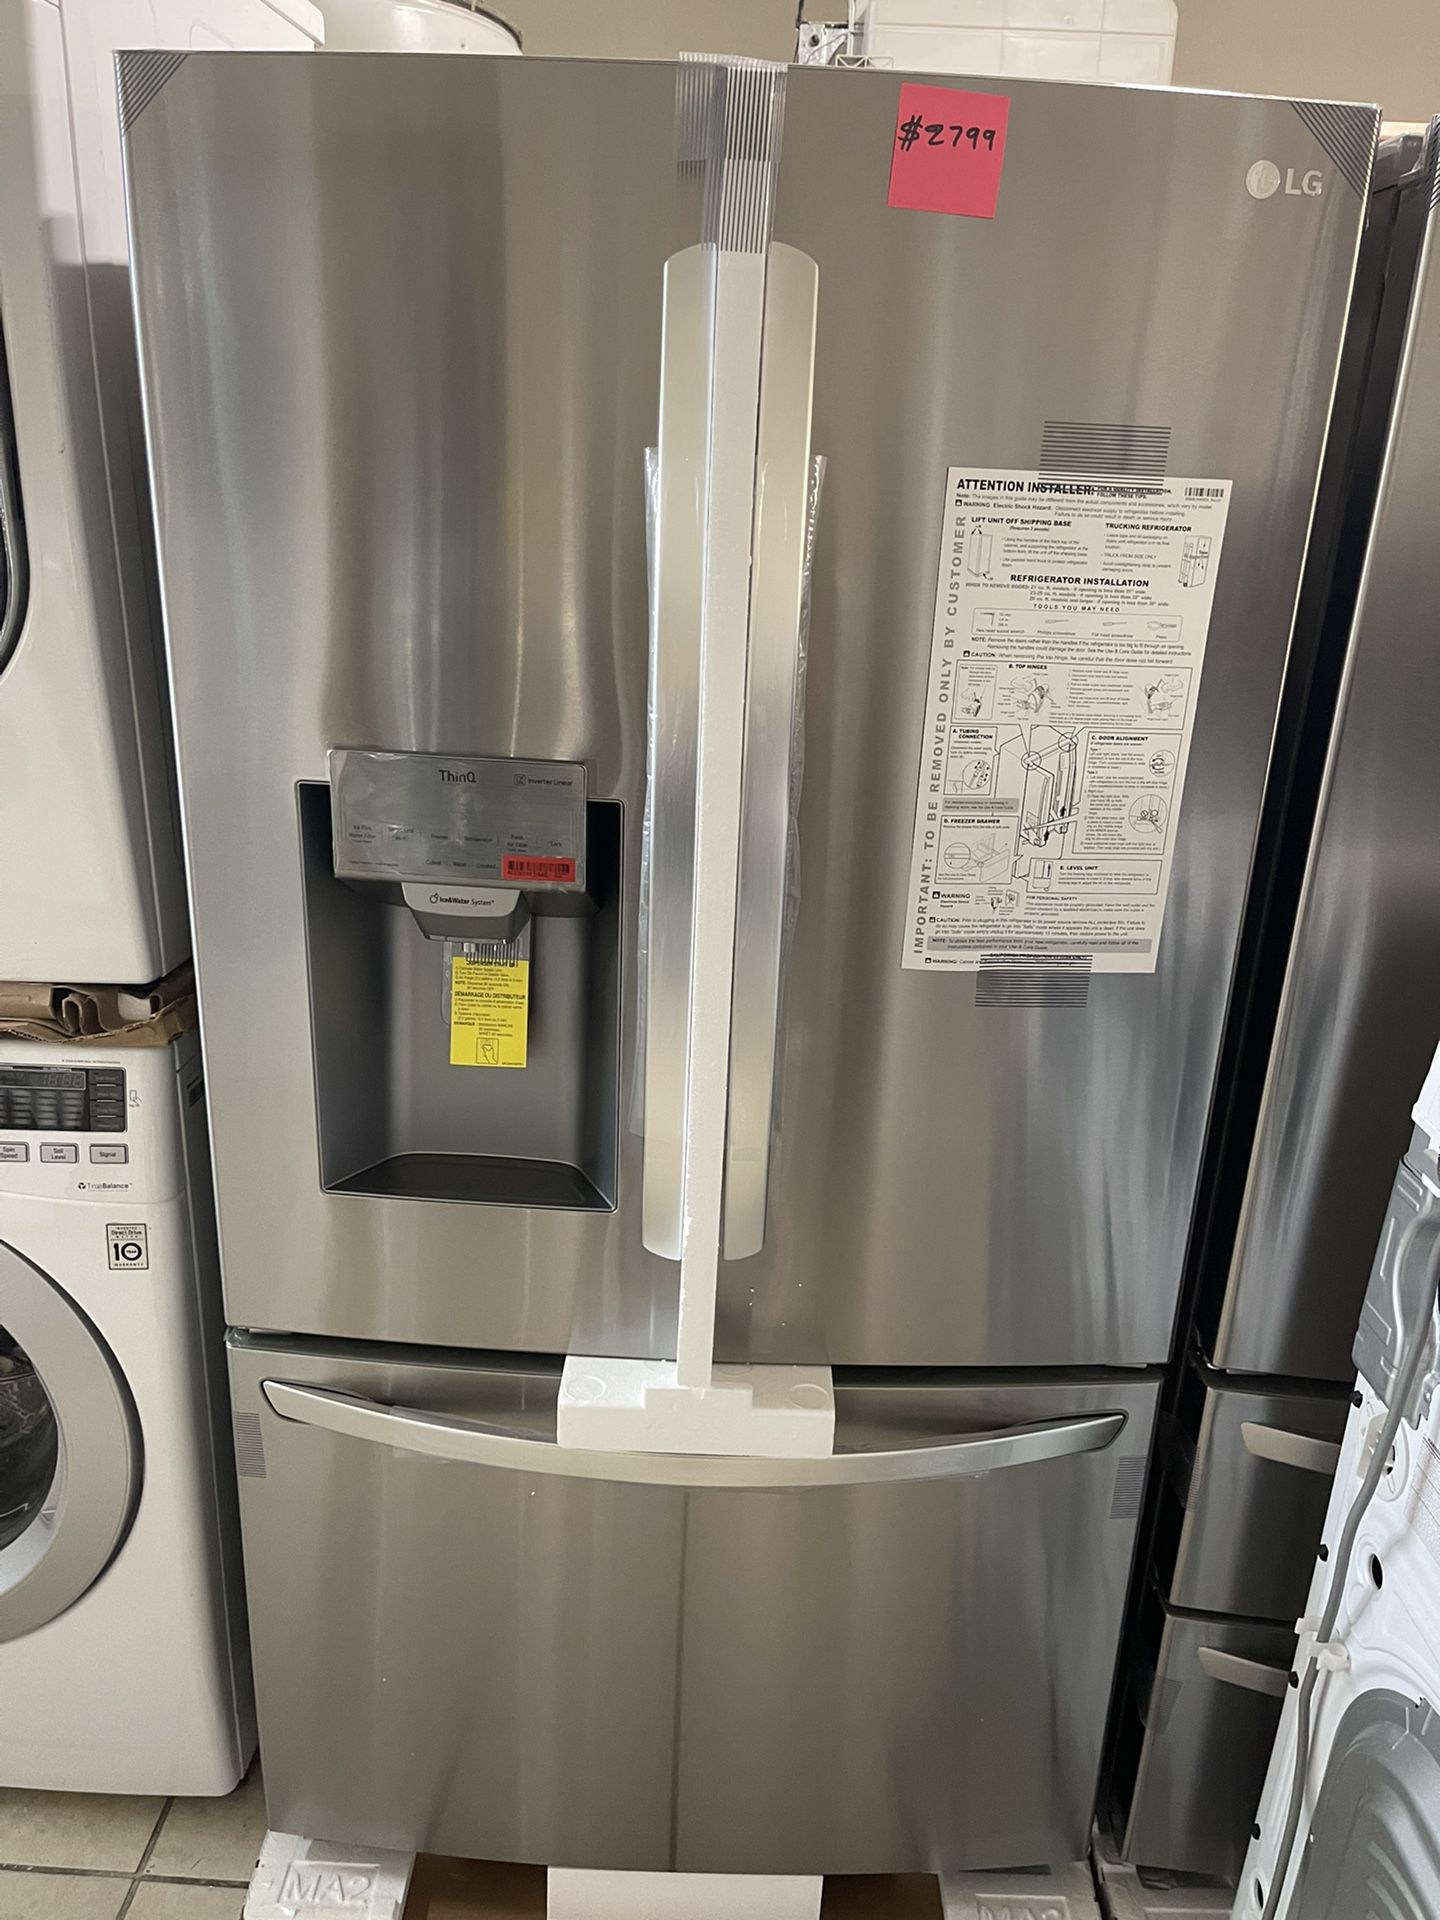 Brand New Lg French Door Refrigerator 